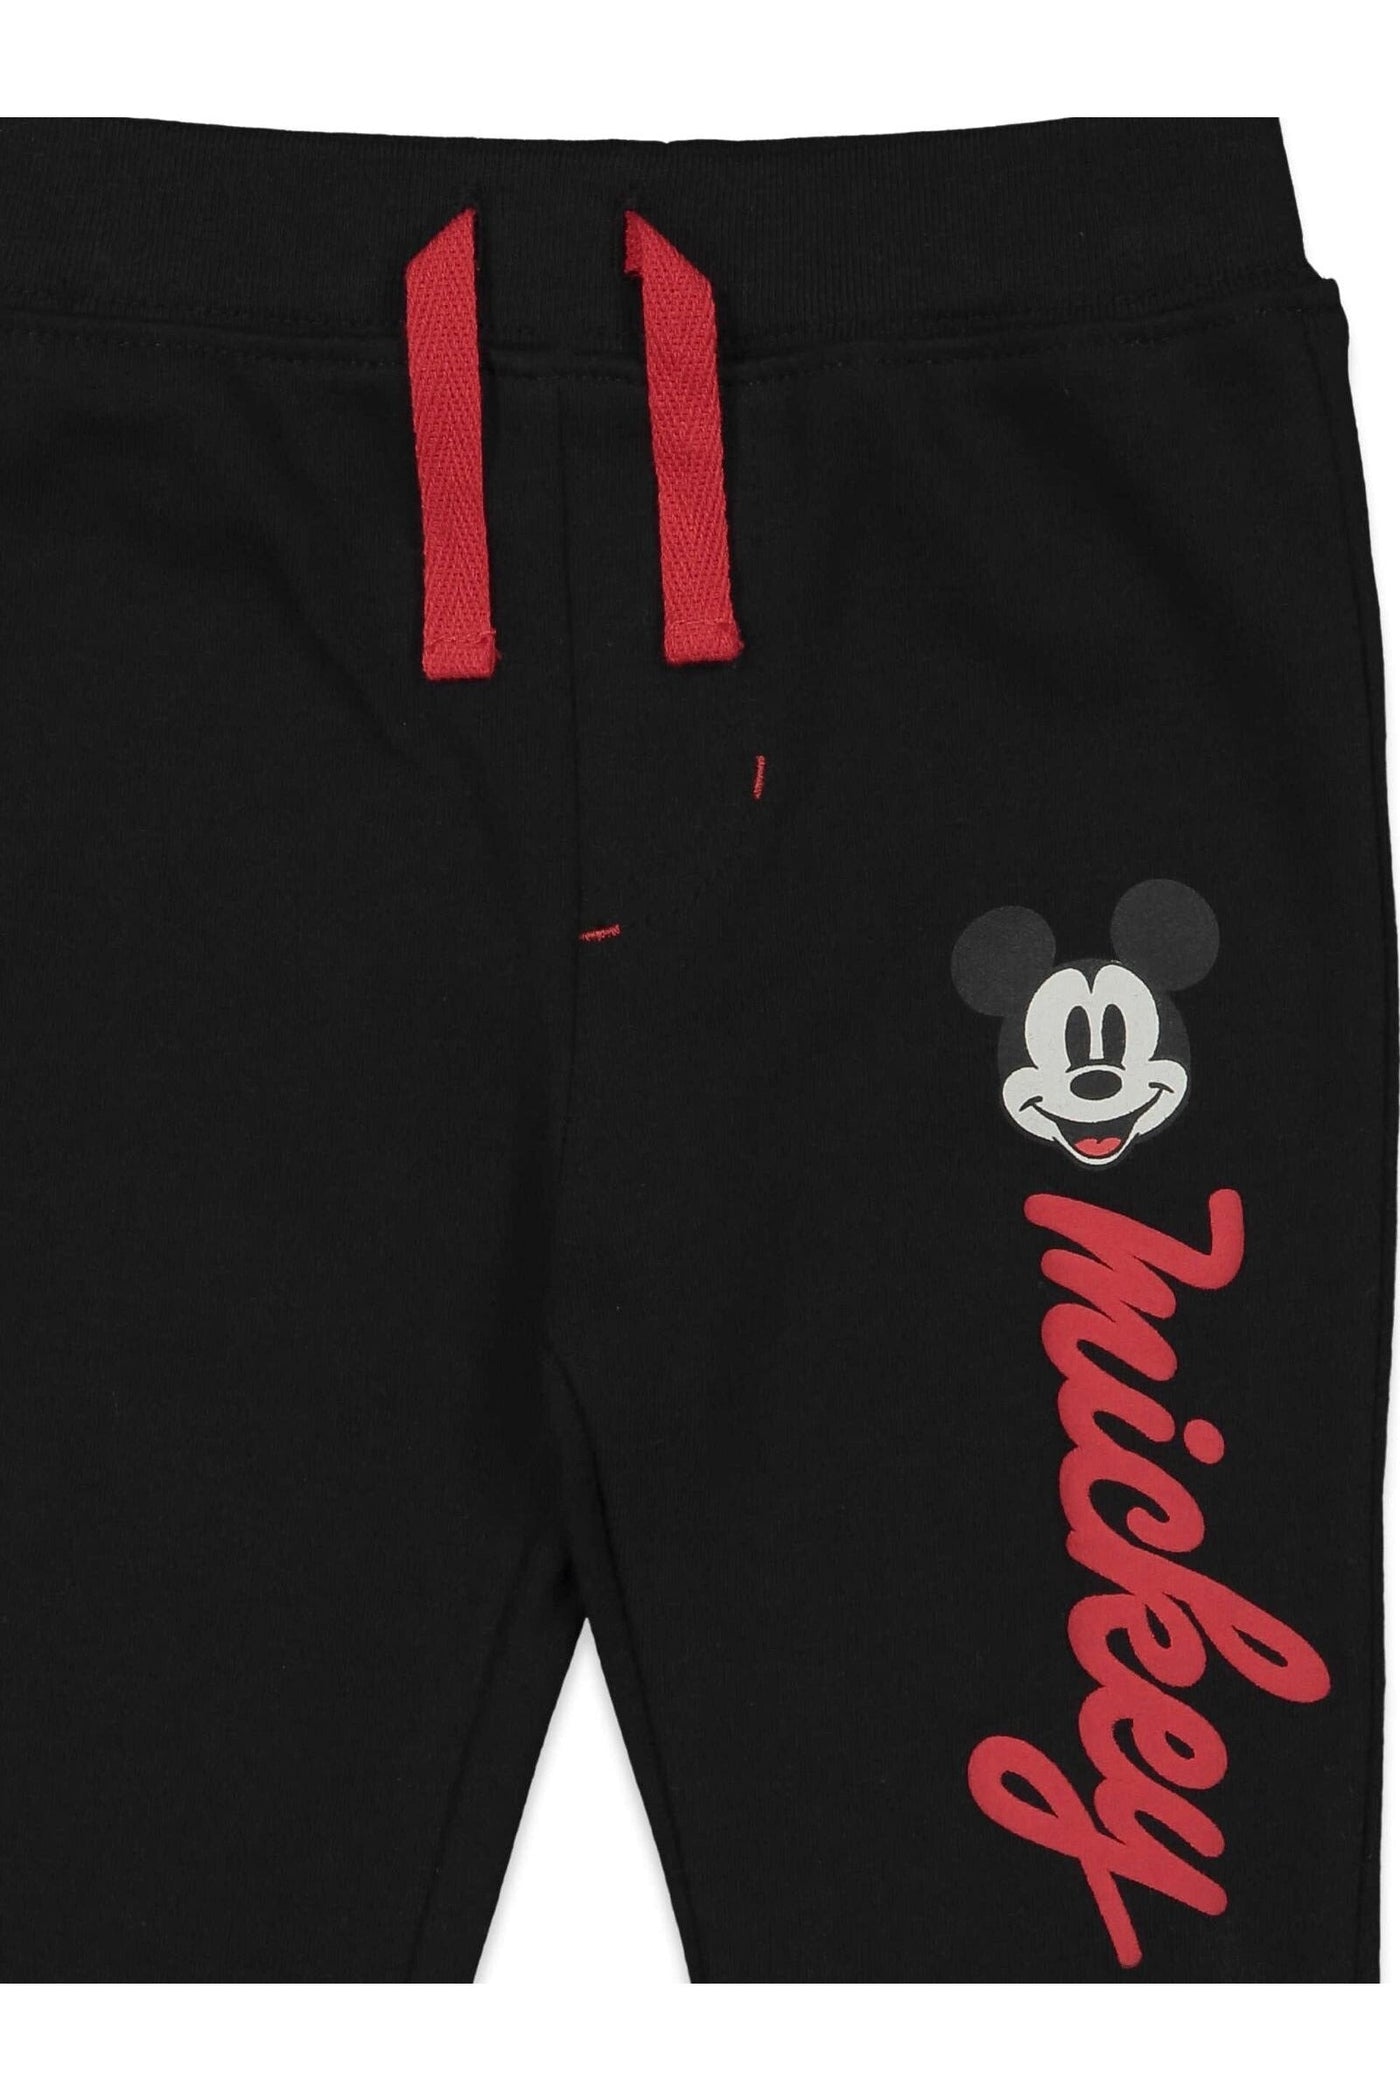 Pack de 2 pantalones jogger de Mickey Mouse